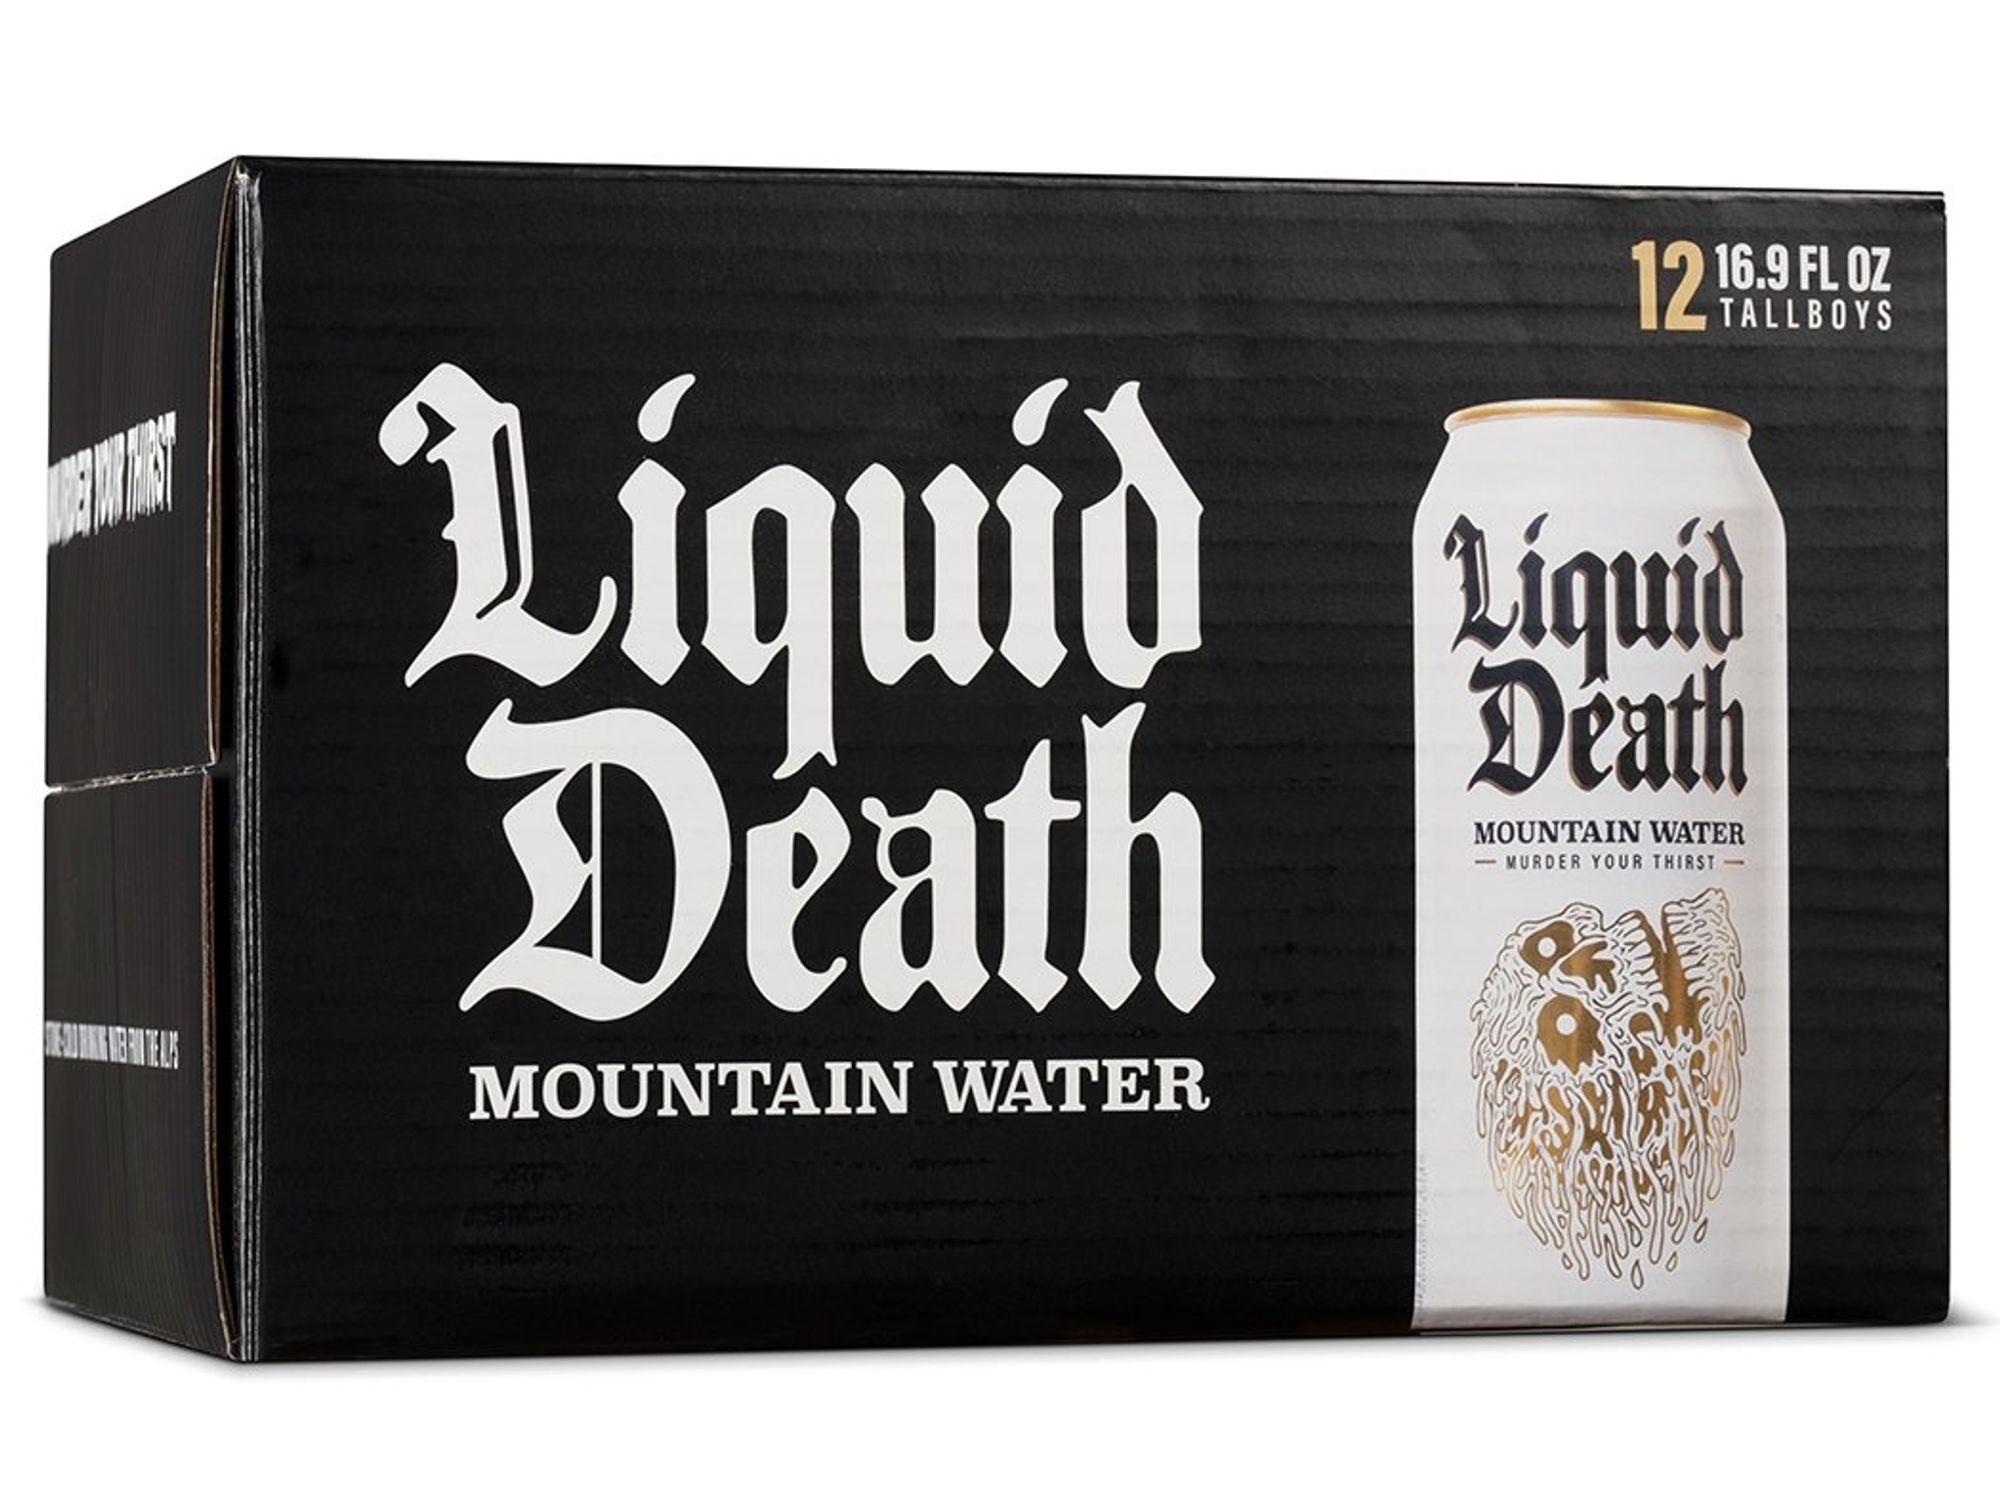 Liquid Death Files Paperwork to Raise $15 Million